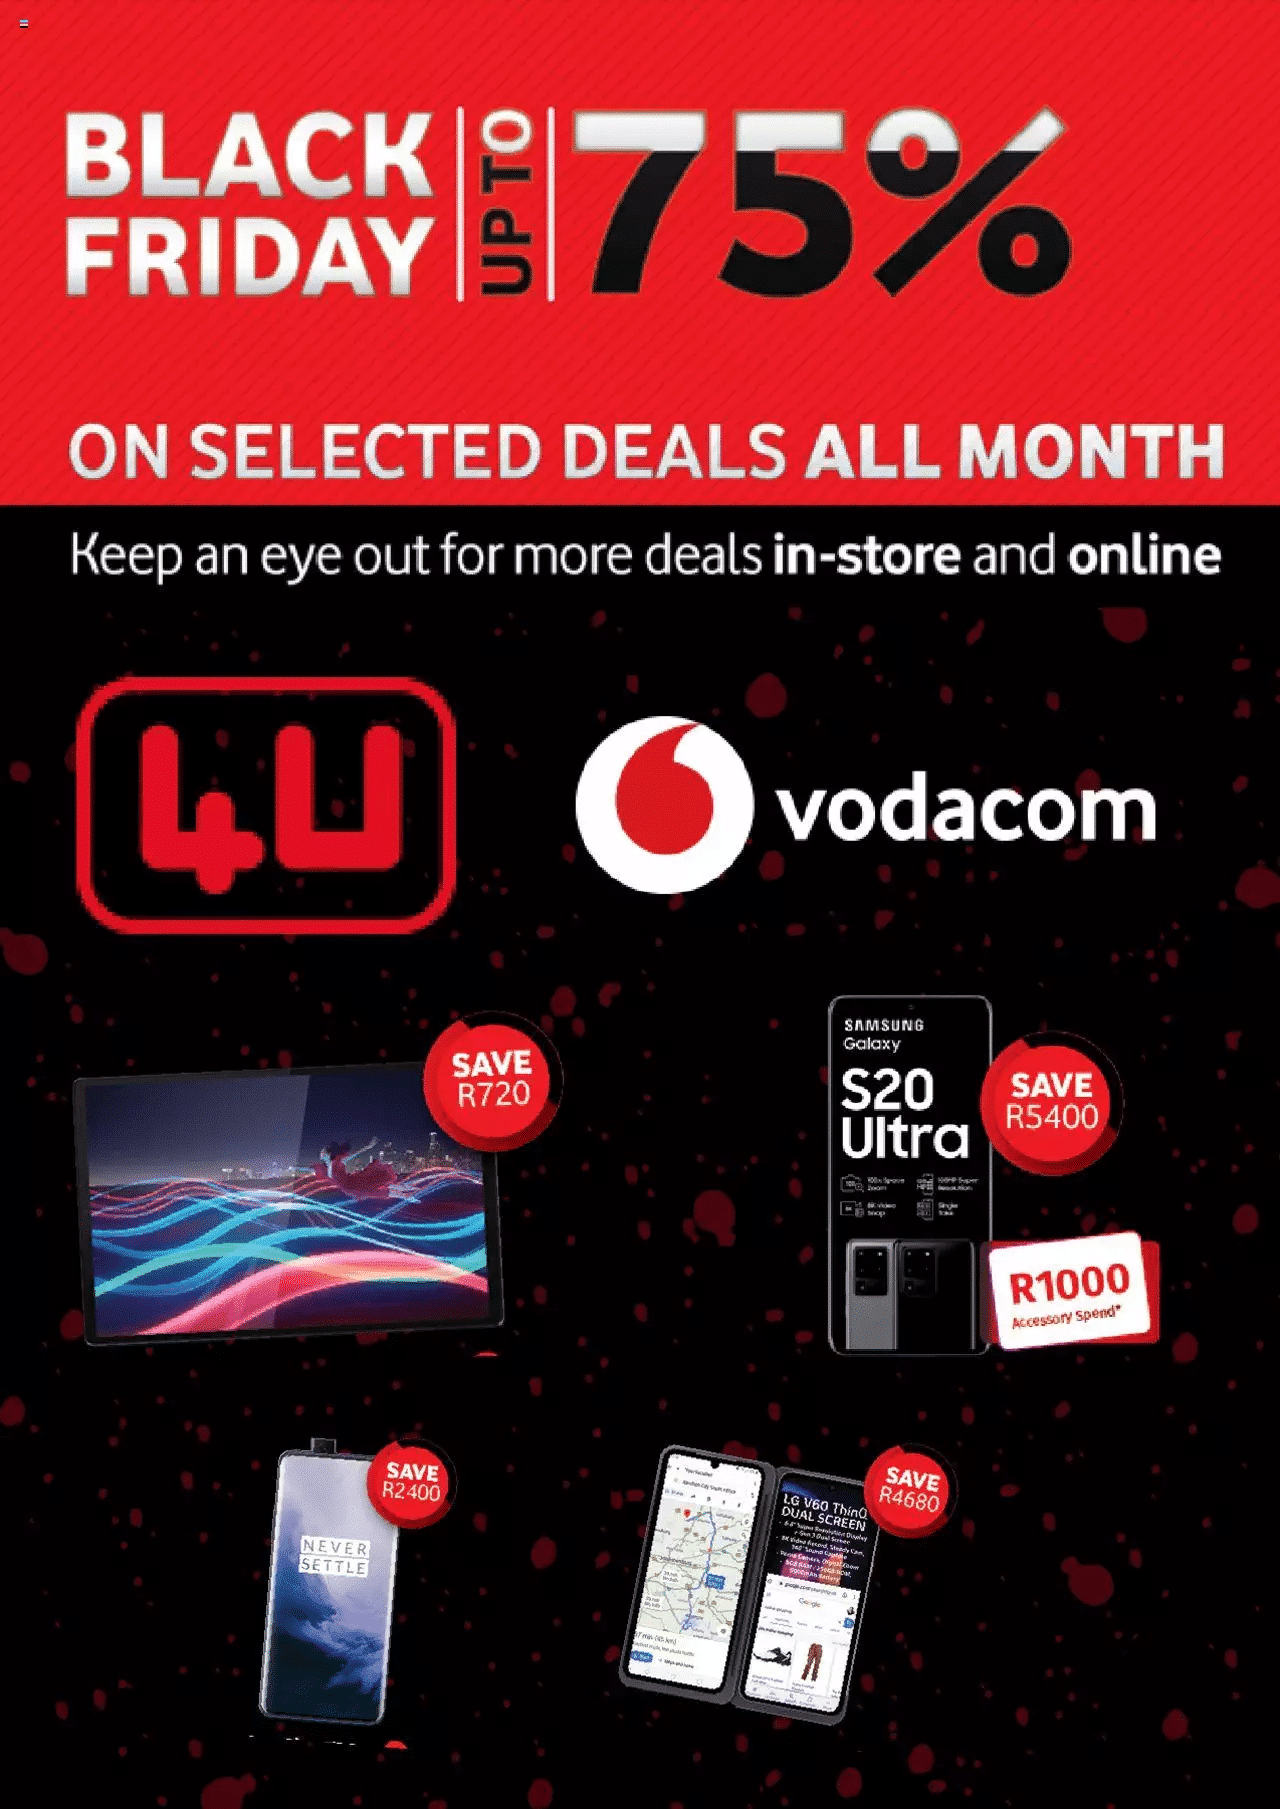 Vodacom Black Friday Deals & Specials 2021 - Will Black Friday Deals Be For Universe